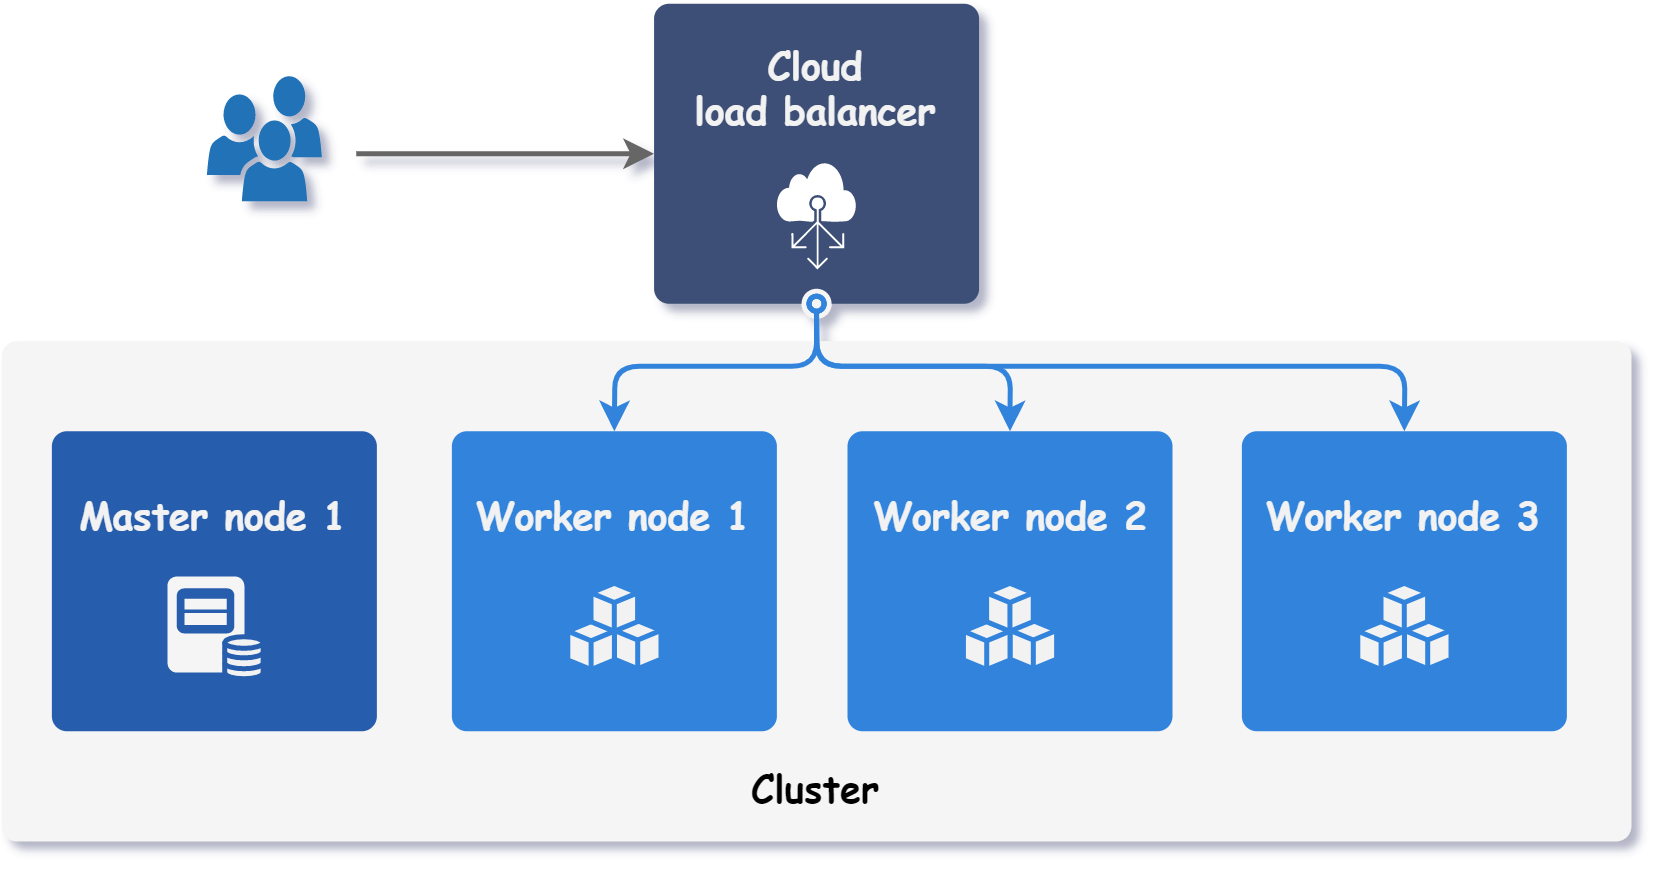 Cloud provider load balancer scheme